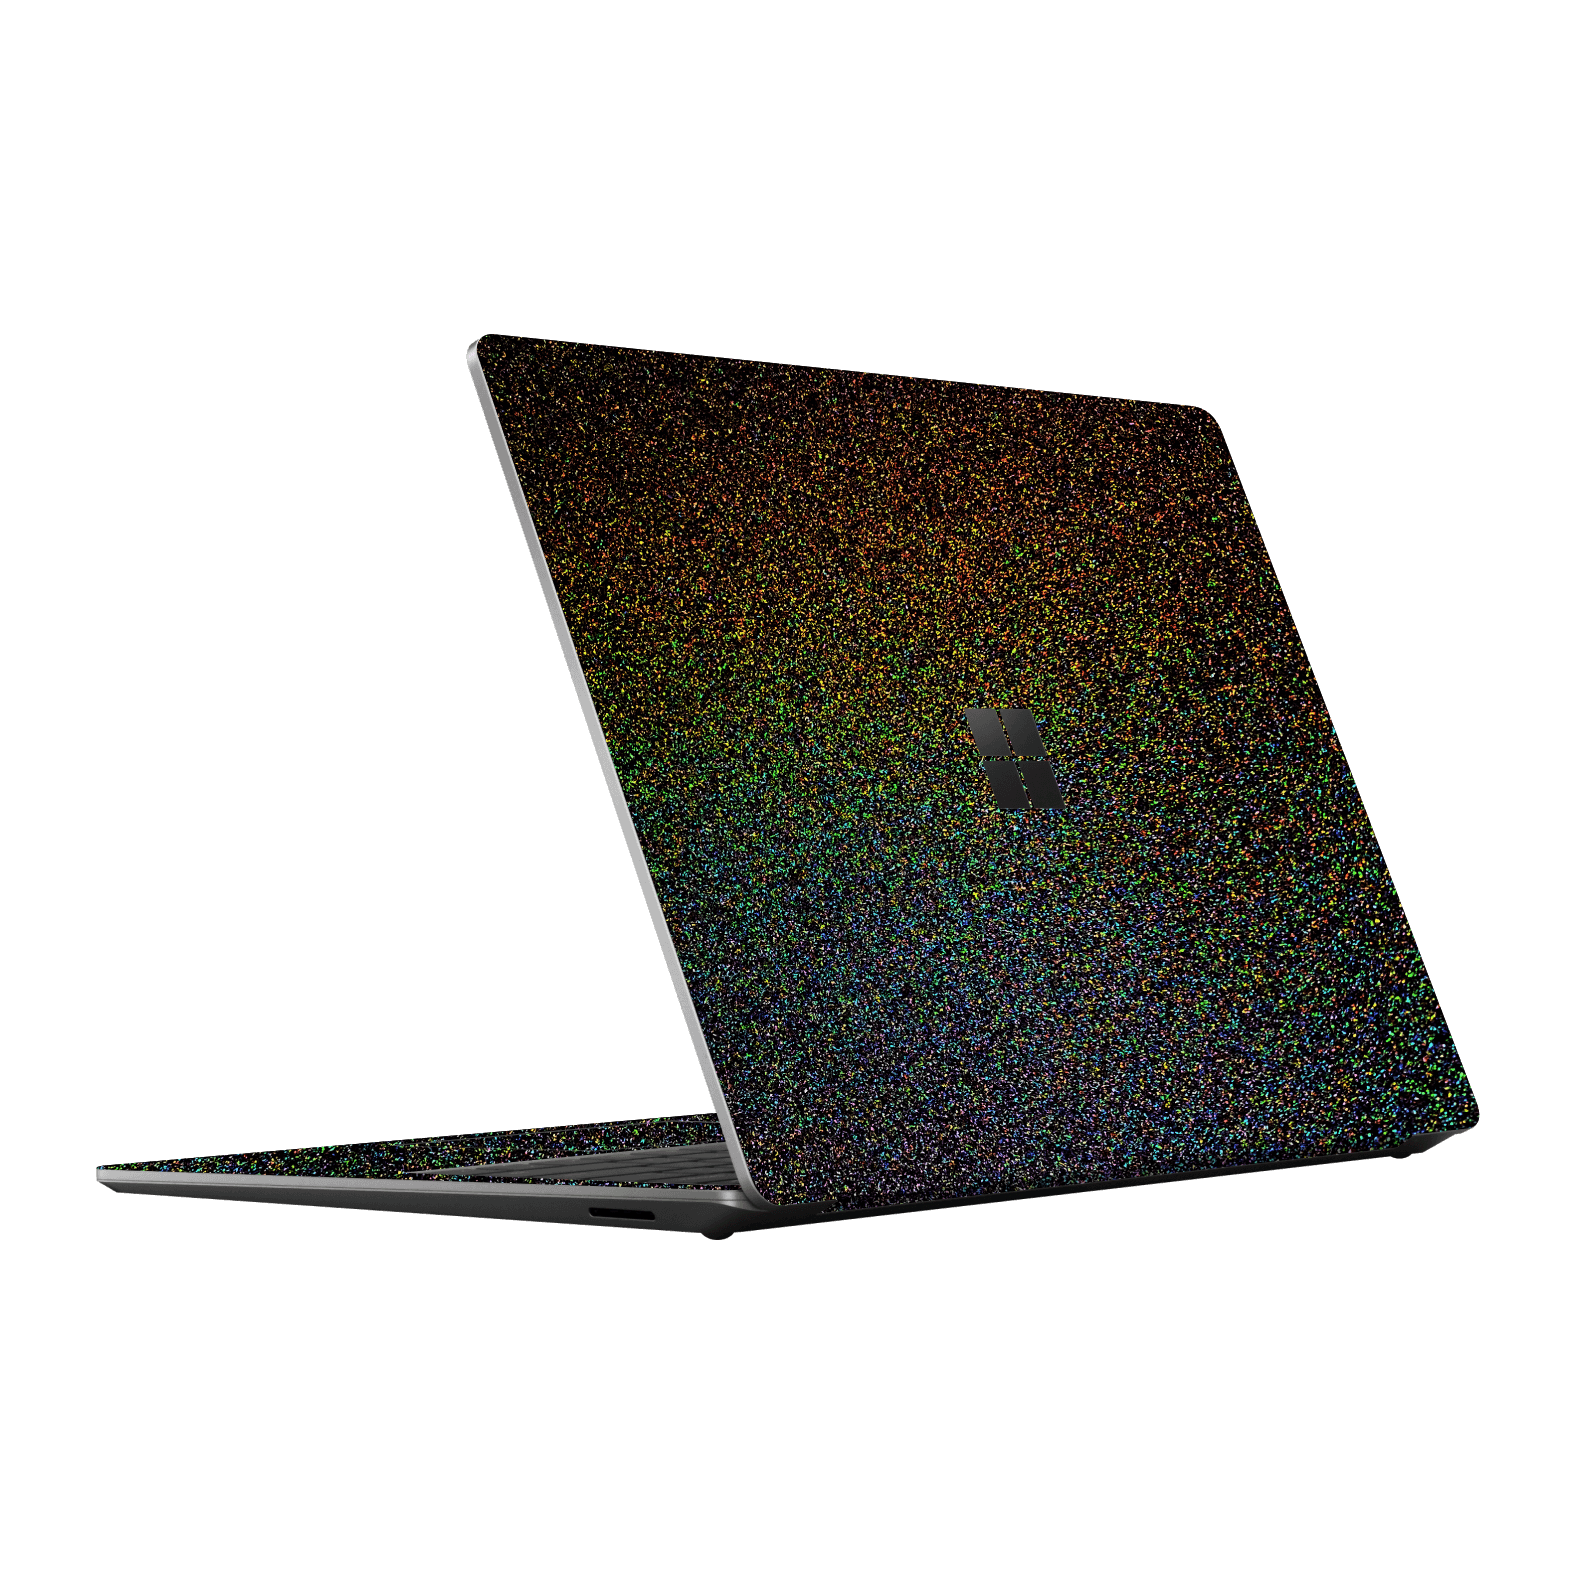 Microsoft Surface Laptop Go 3 GALAXY Galactic Black Milky Way Rainbow Sparkling Metallic Gloss Finish Skin Wrap Sticker Decal Cover Protector by EasySkinz | EasySkinz.com